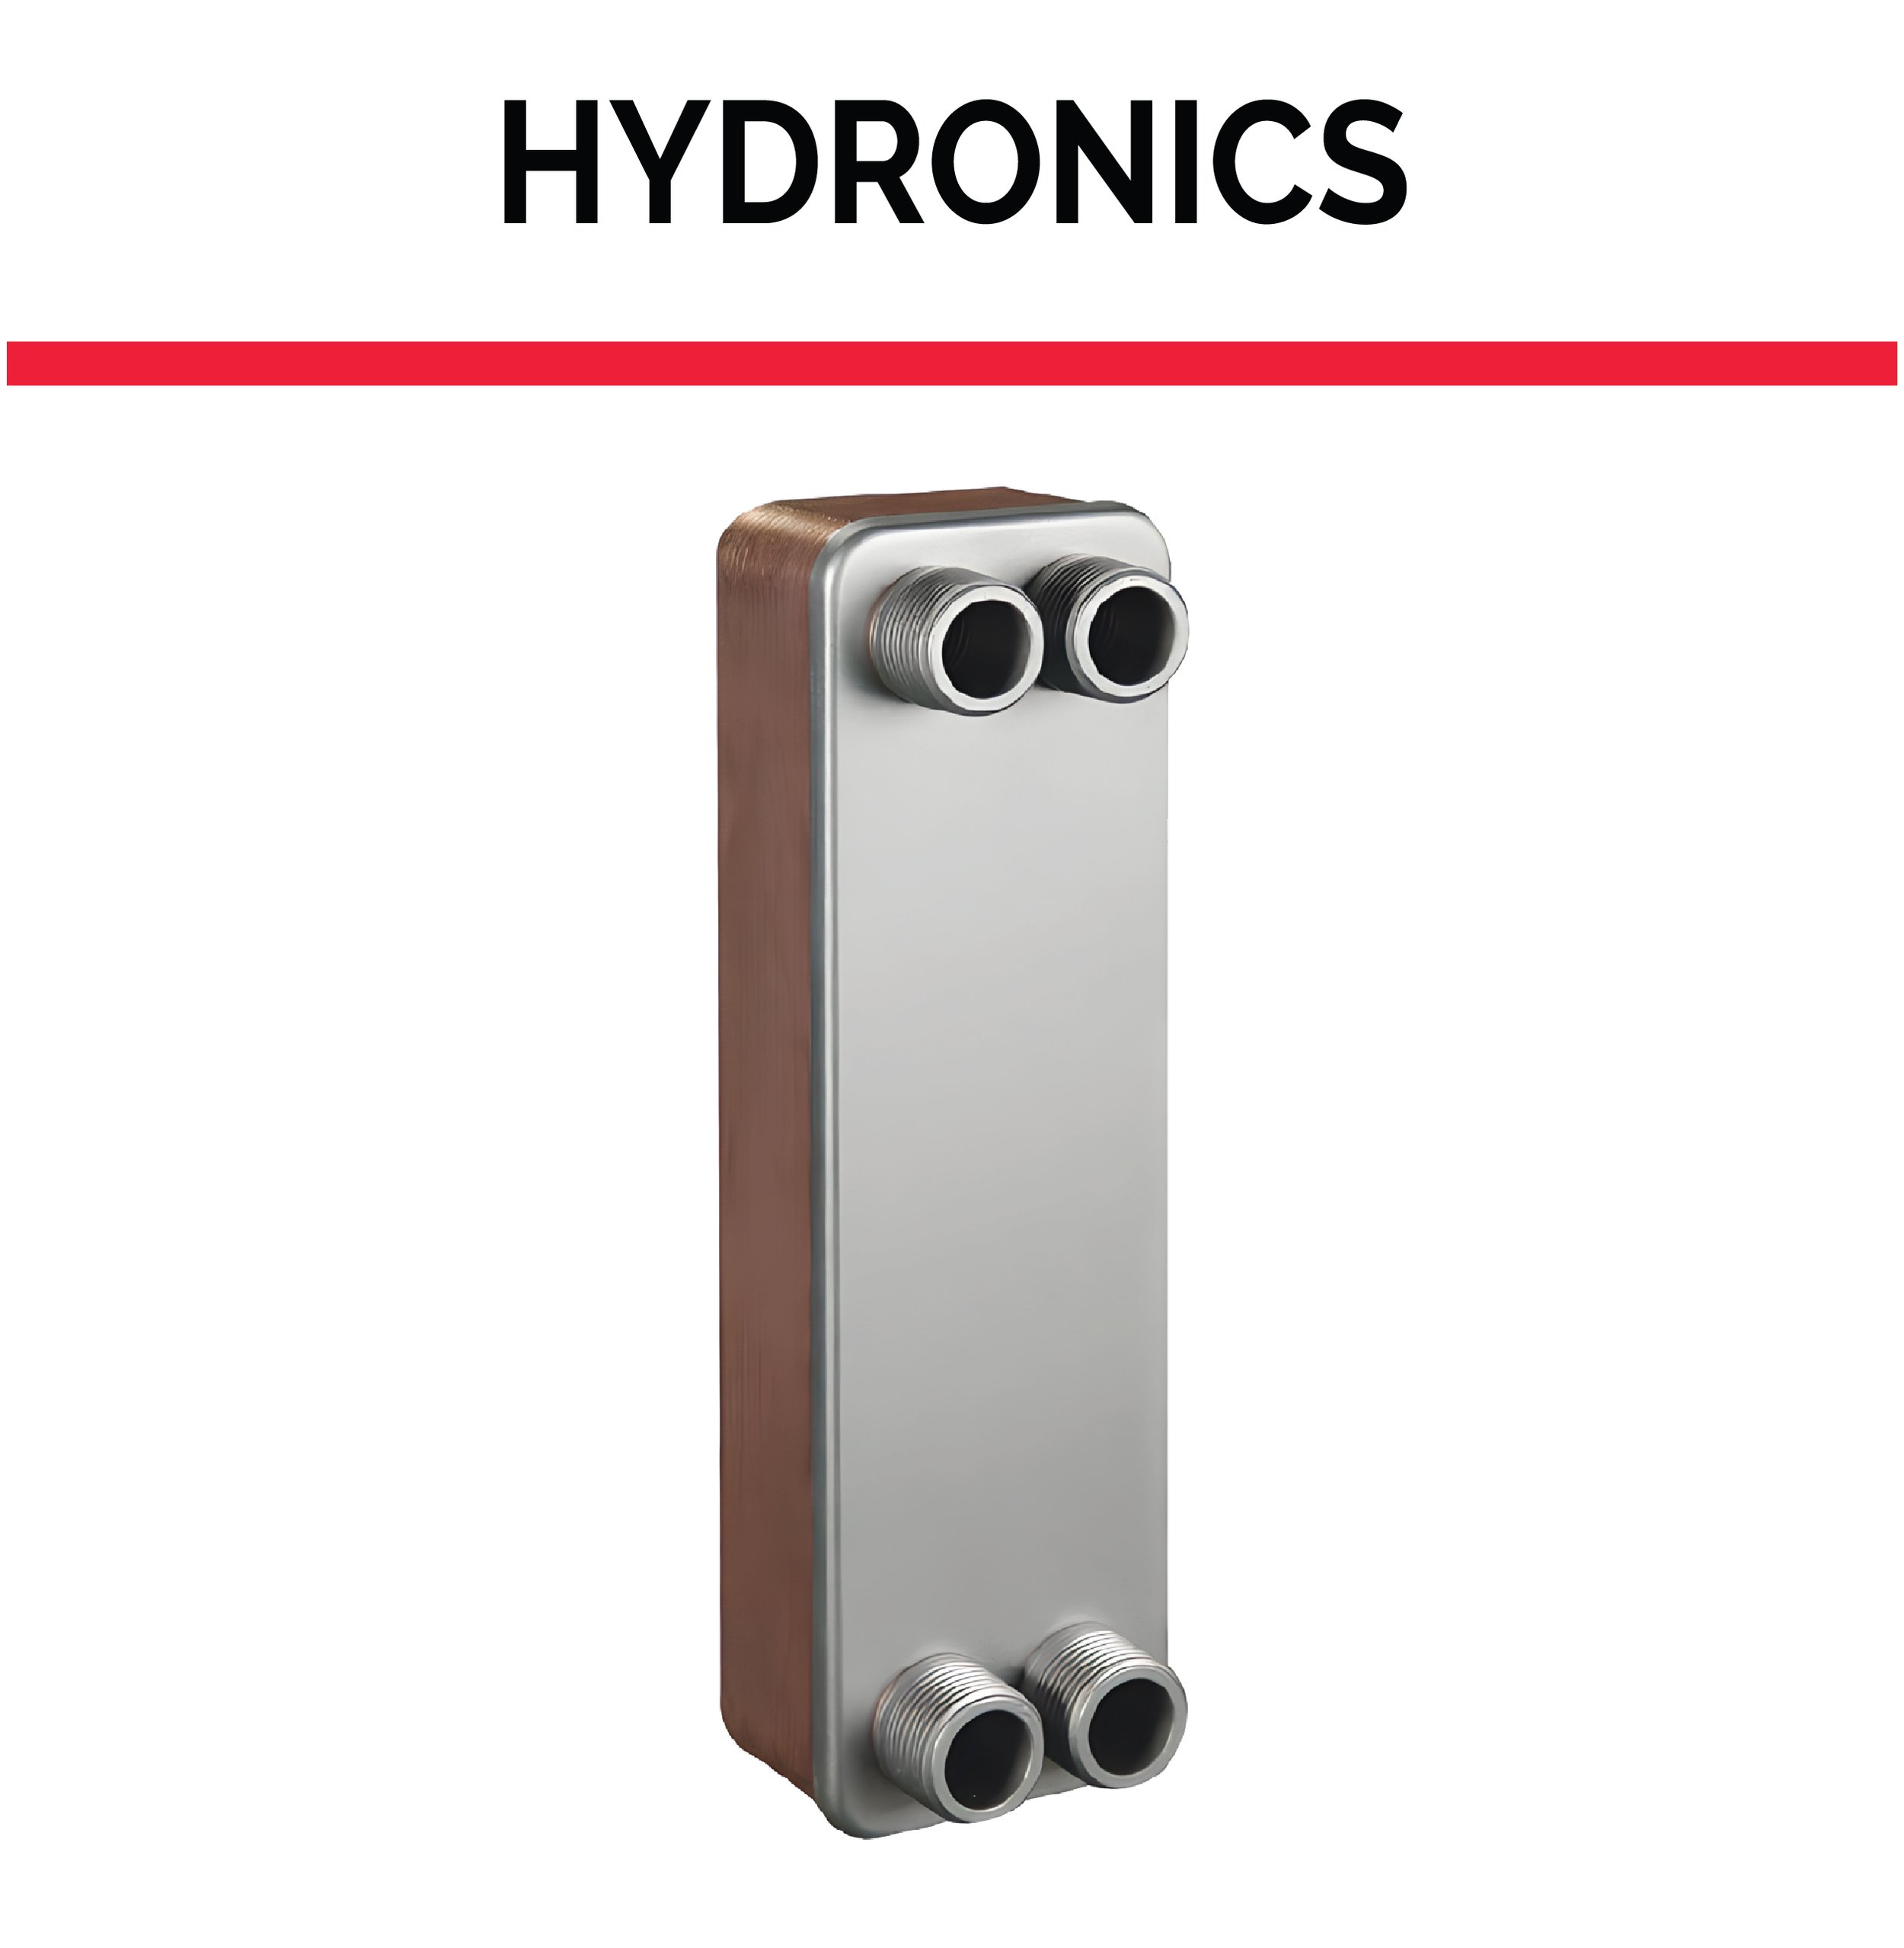 Hydronics.jpg